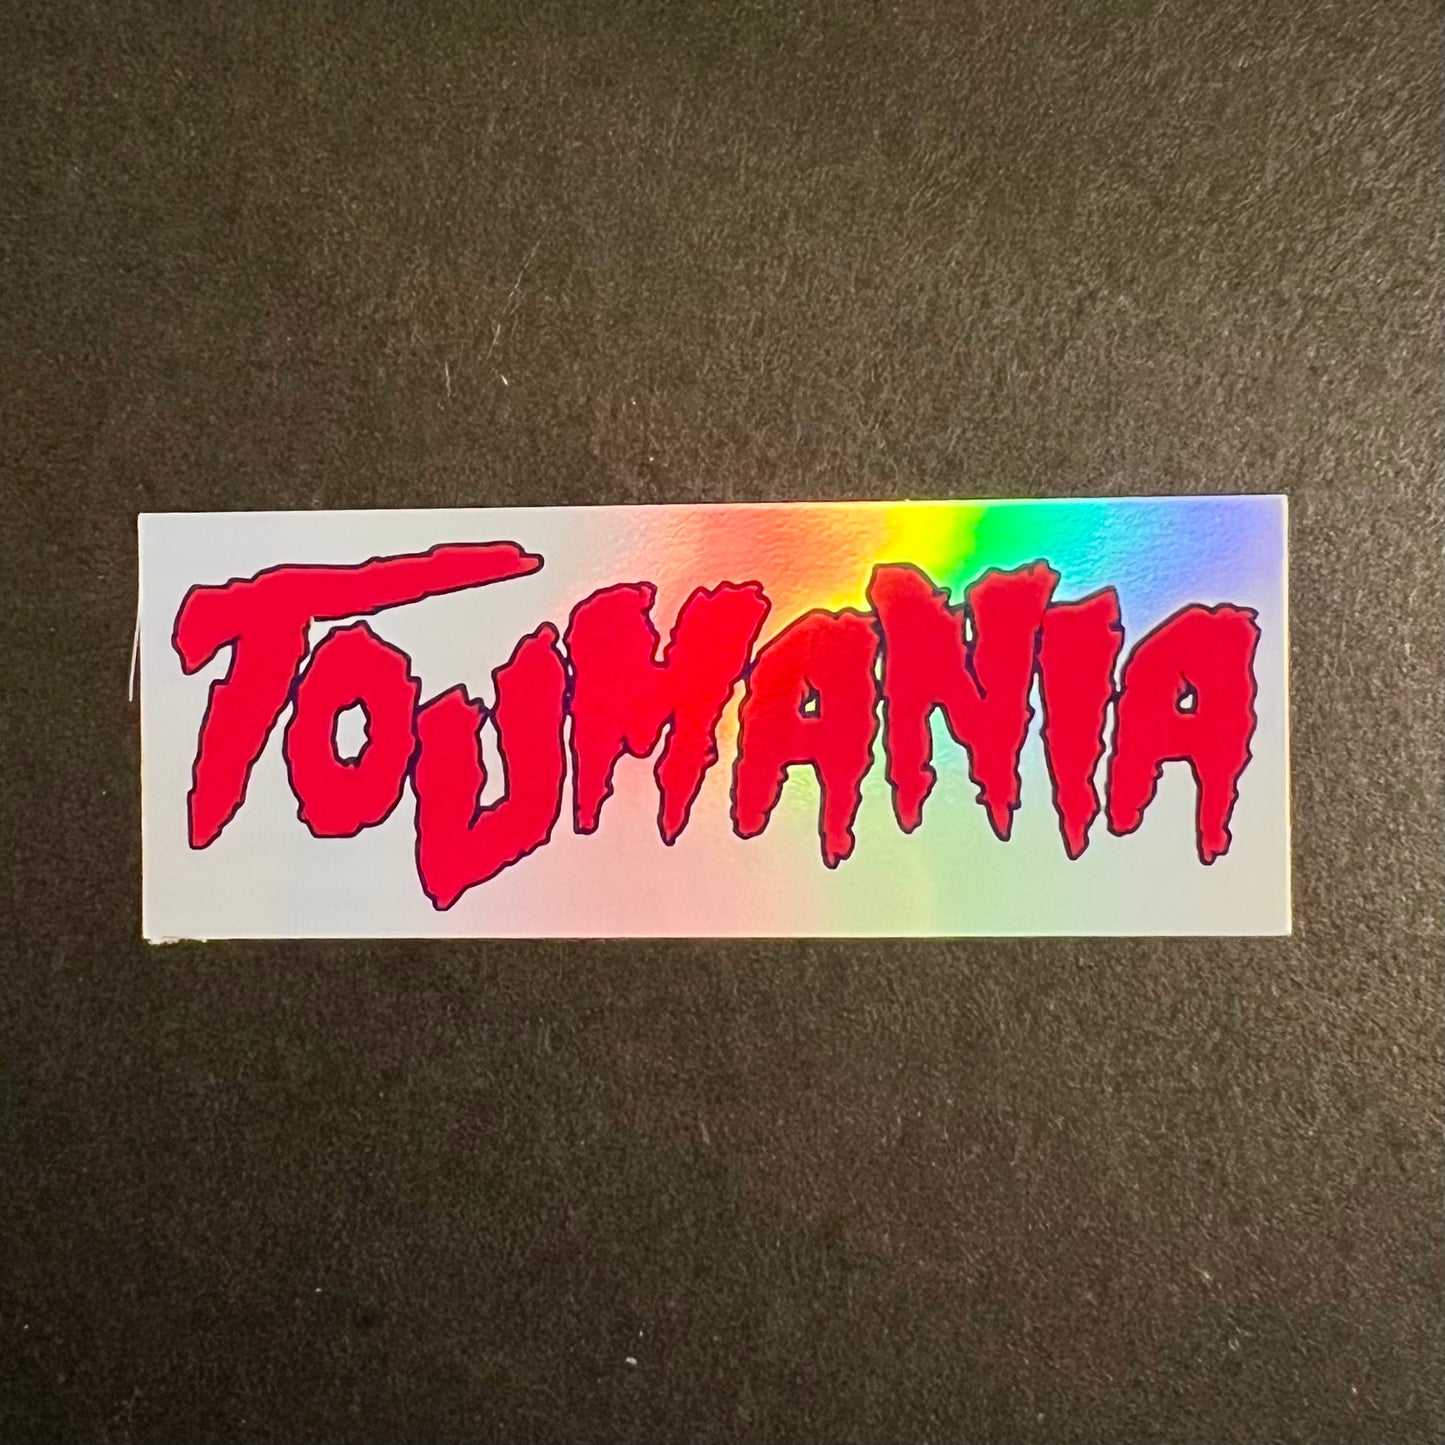 Holographic Toumania Sticker